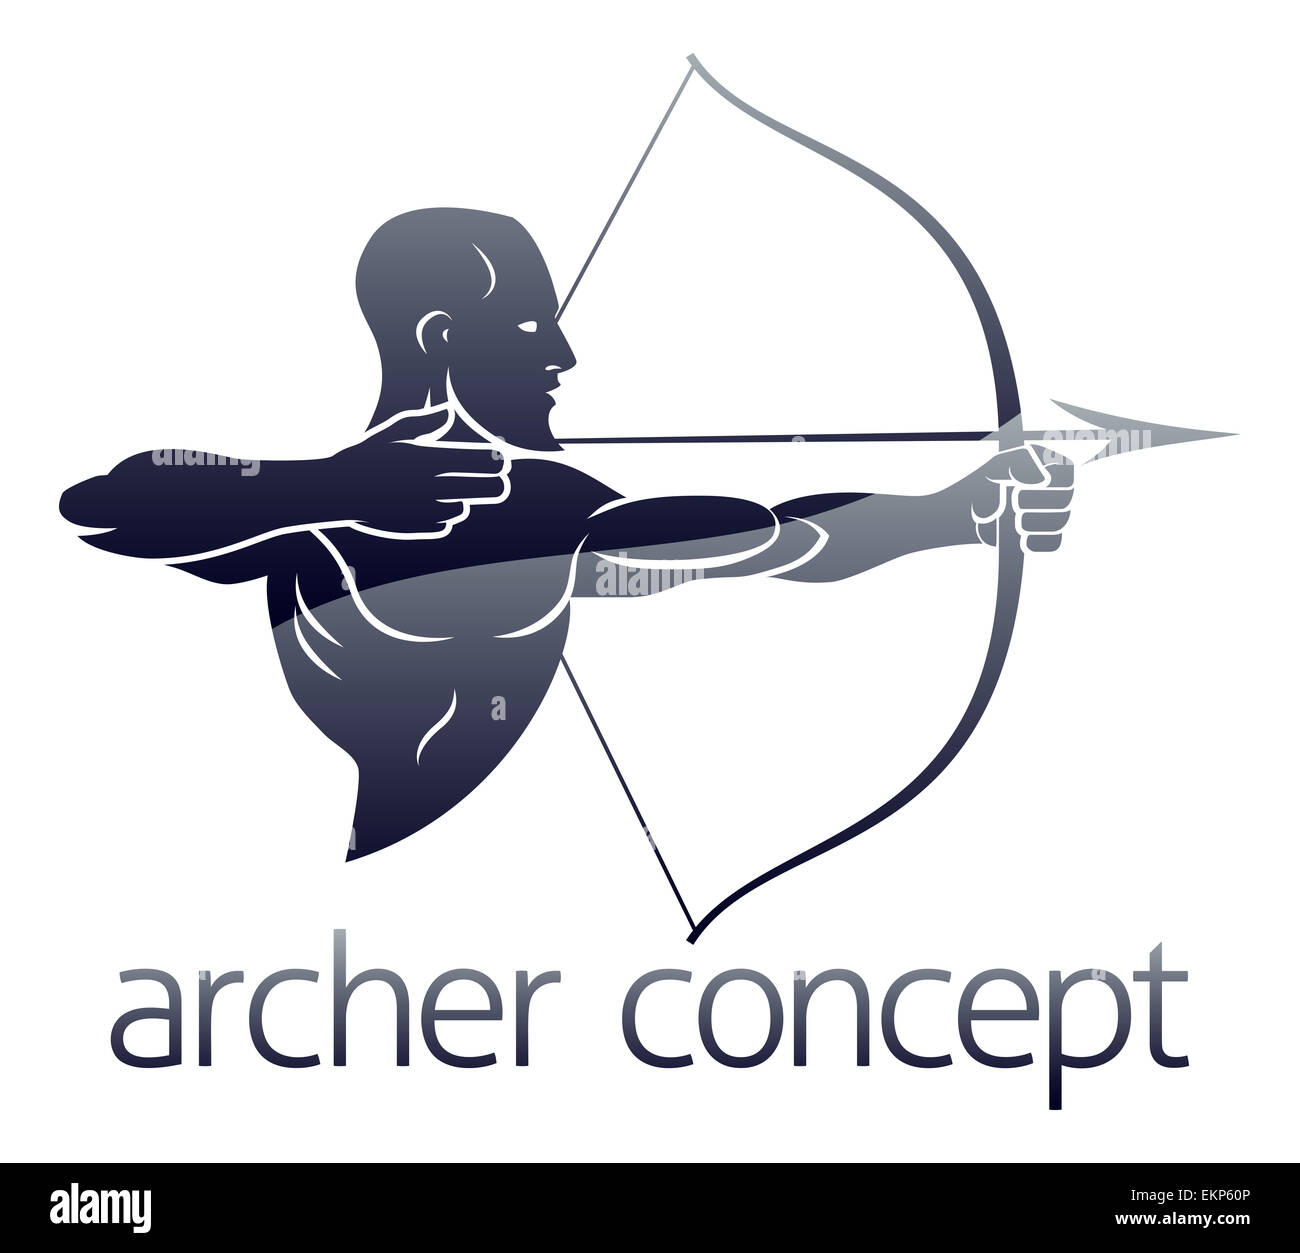 Ilustración de vector realista de arco y flecha de tiro con arco del  sistema de armas de proyectiles. arco flexible que dispara proyectiles  aerodinámicos llamados flechas.